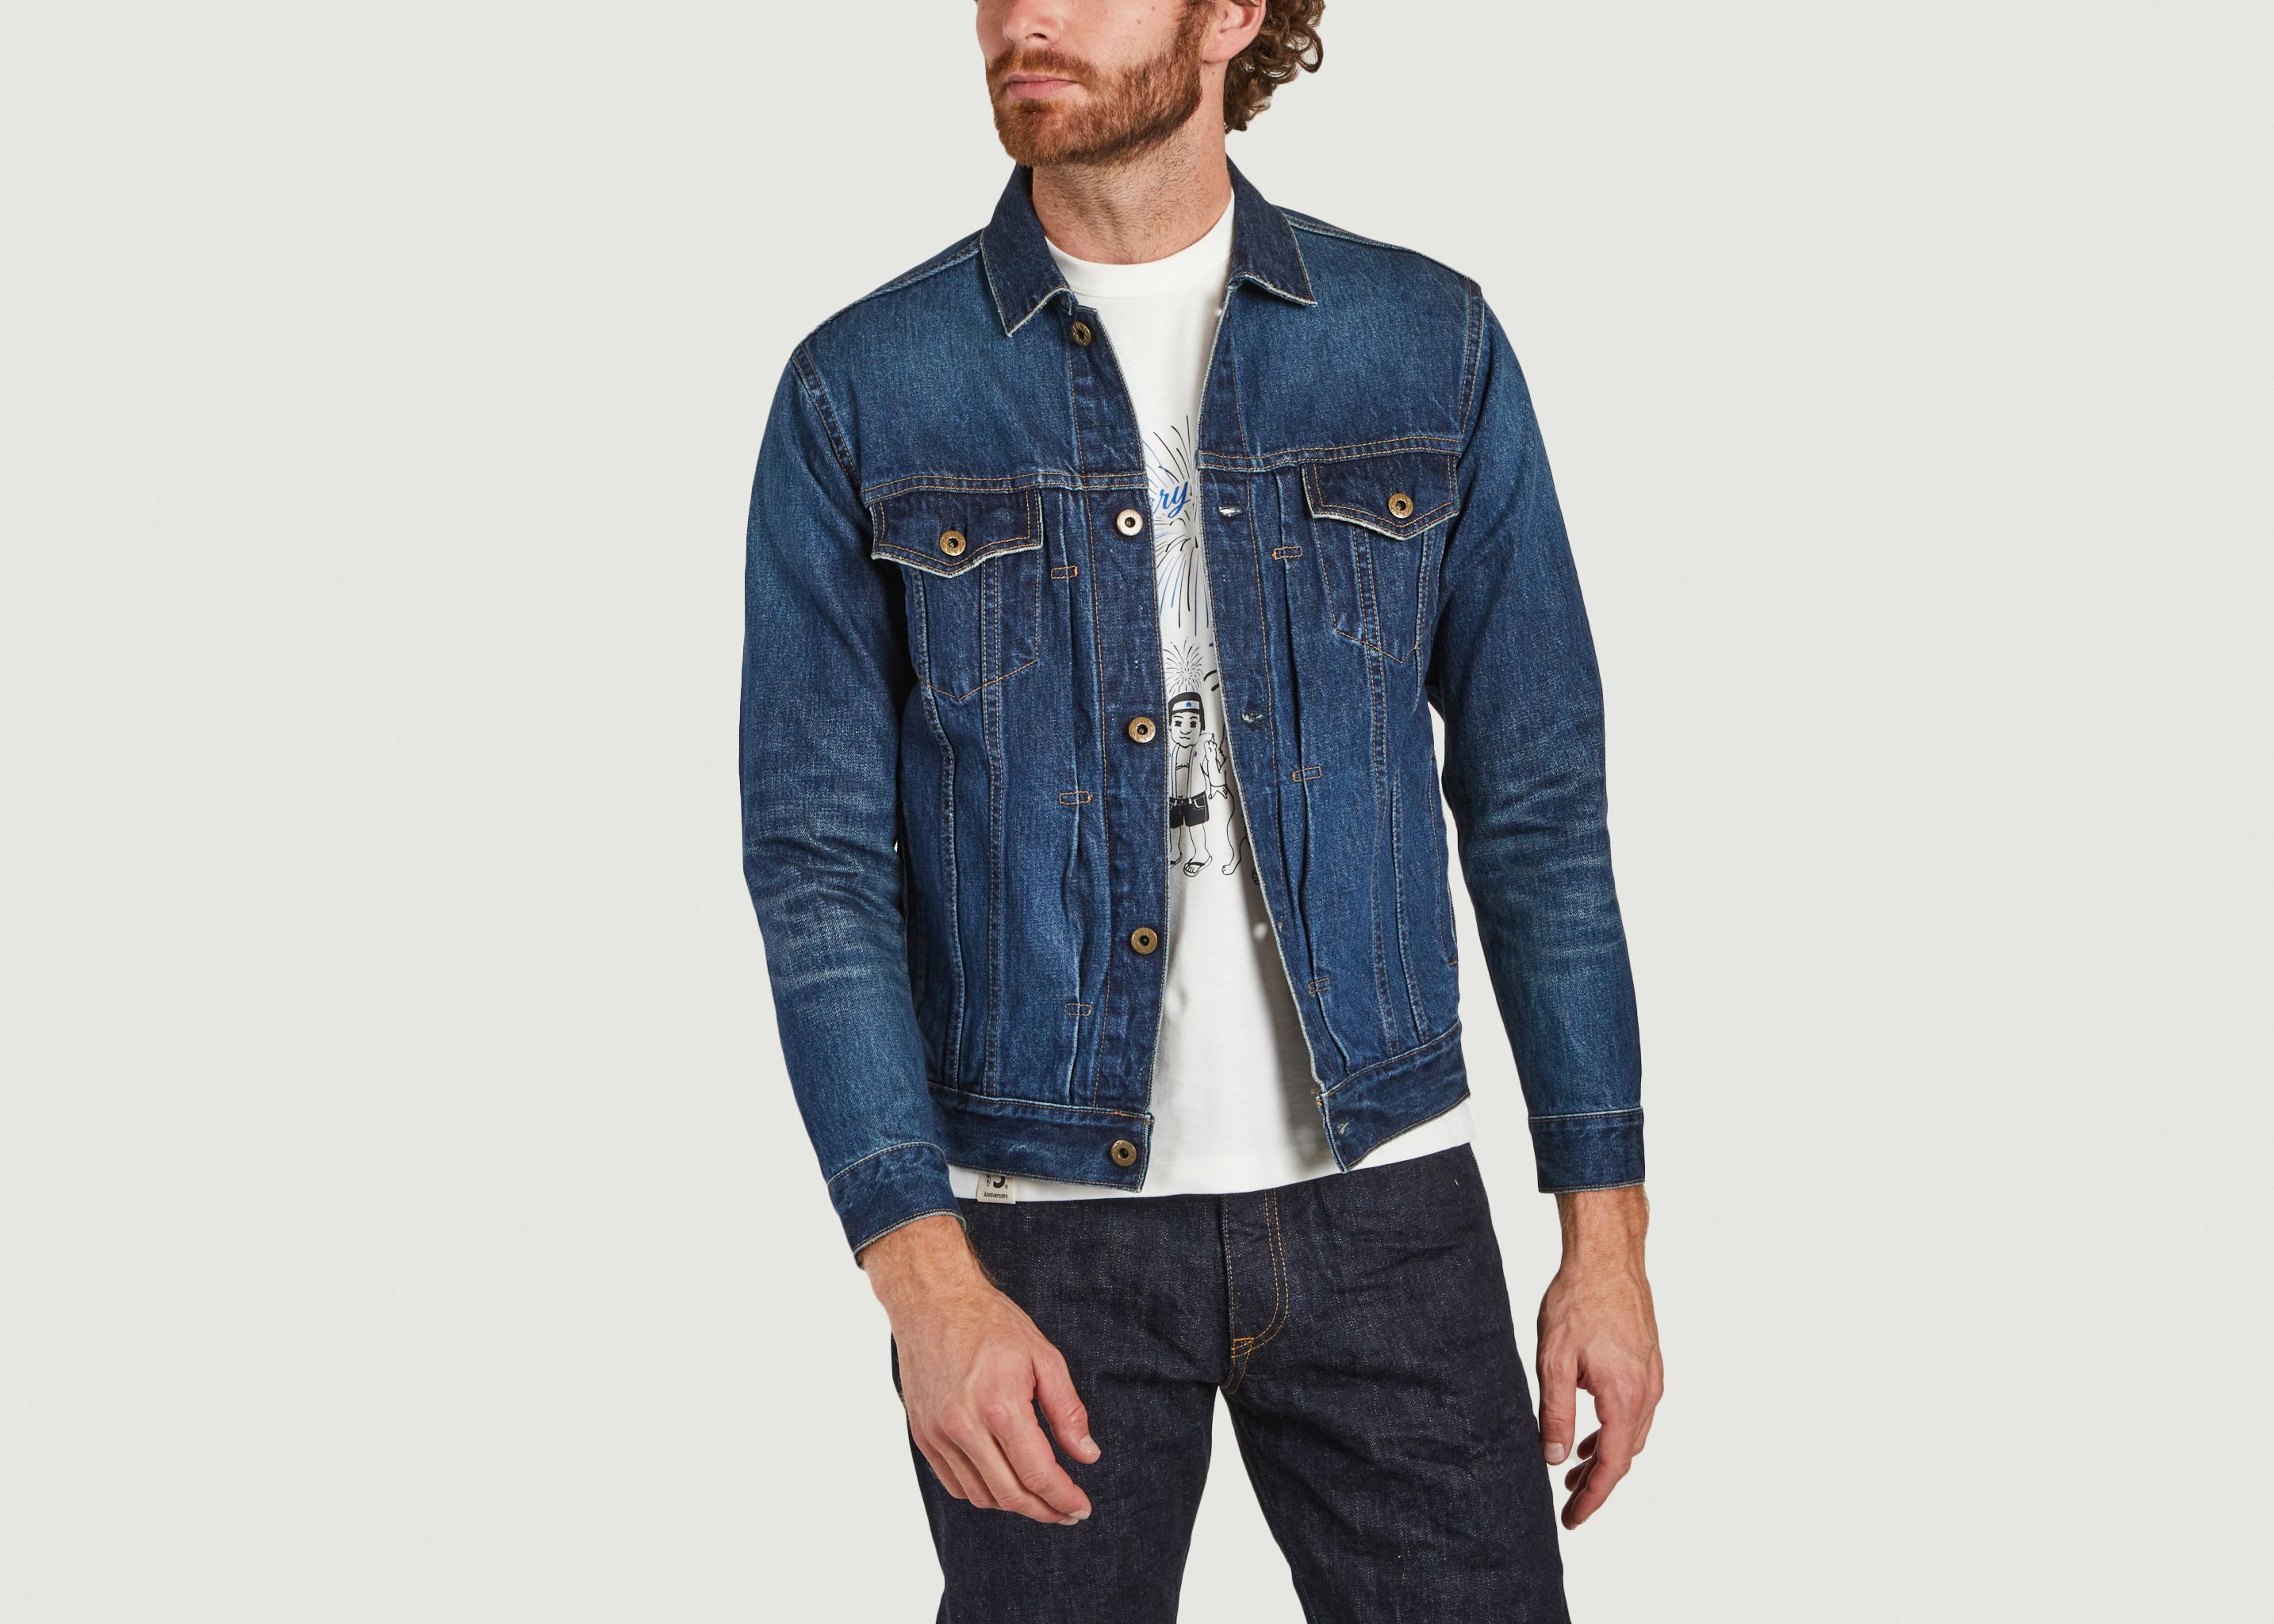 Straight cut denim jacket - Japan Blue Jeans